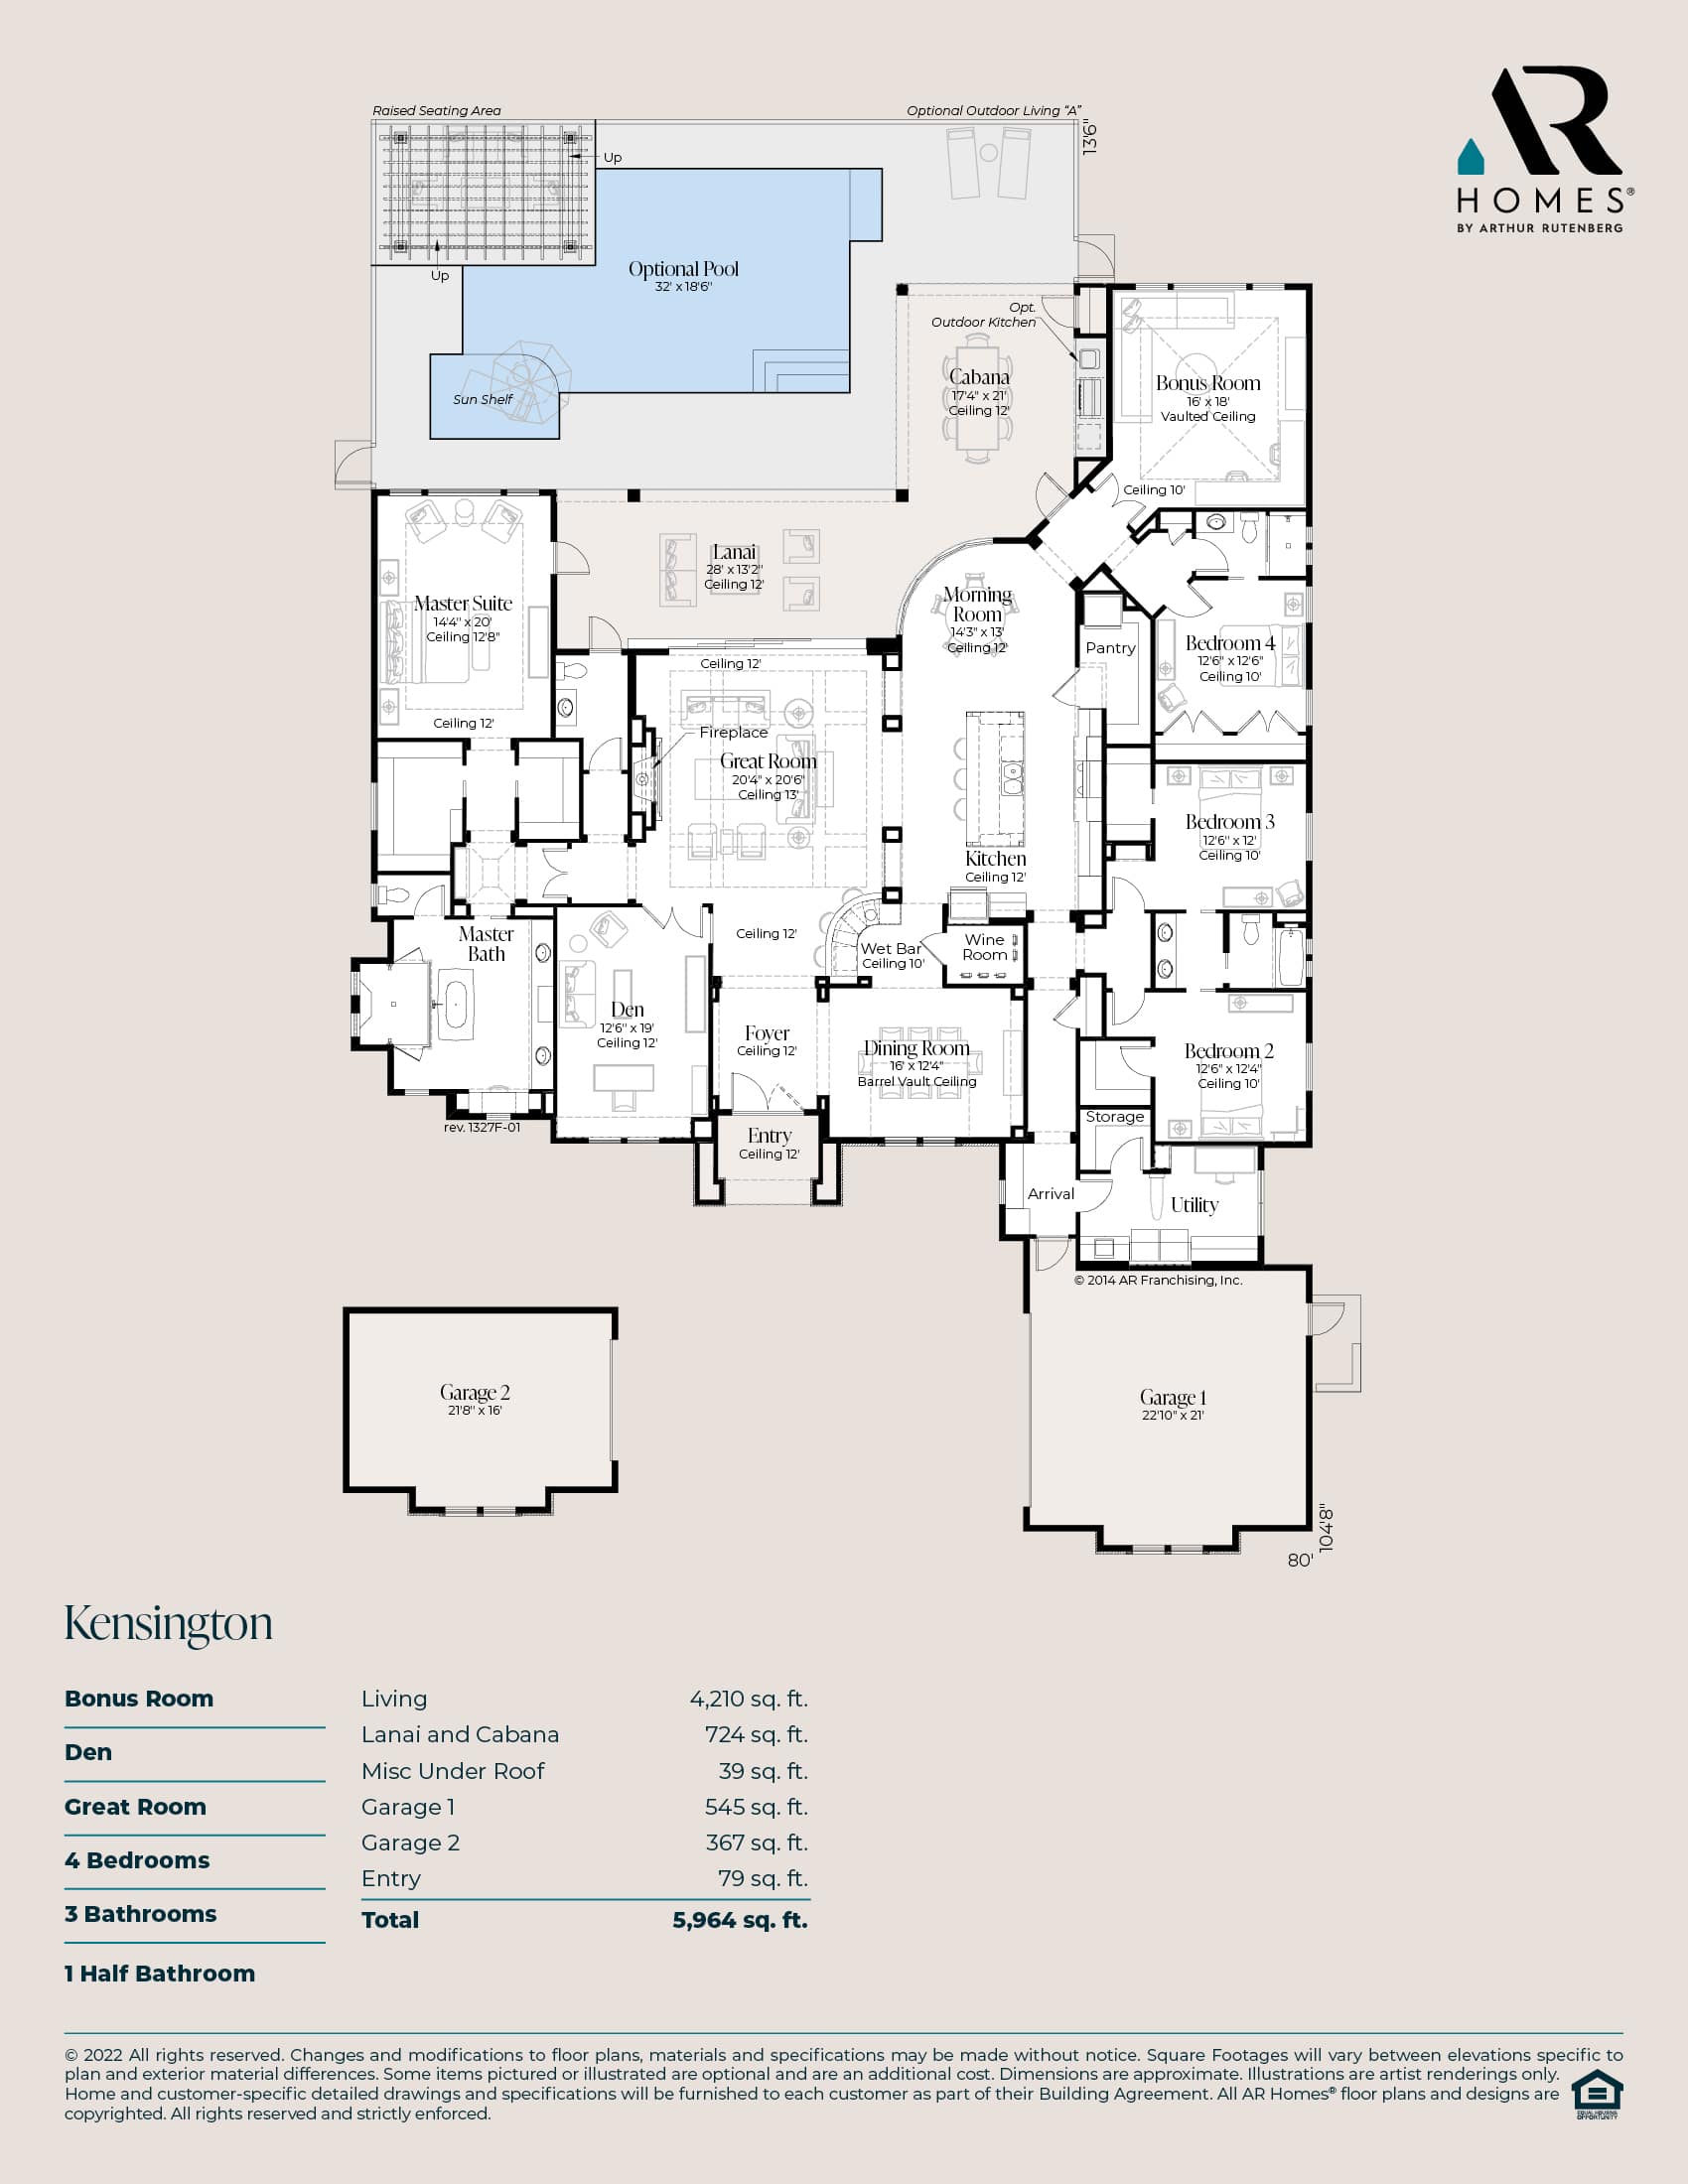 The Kensington Plan Ar Homes By Arthur Rutenberg